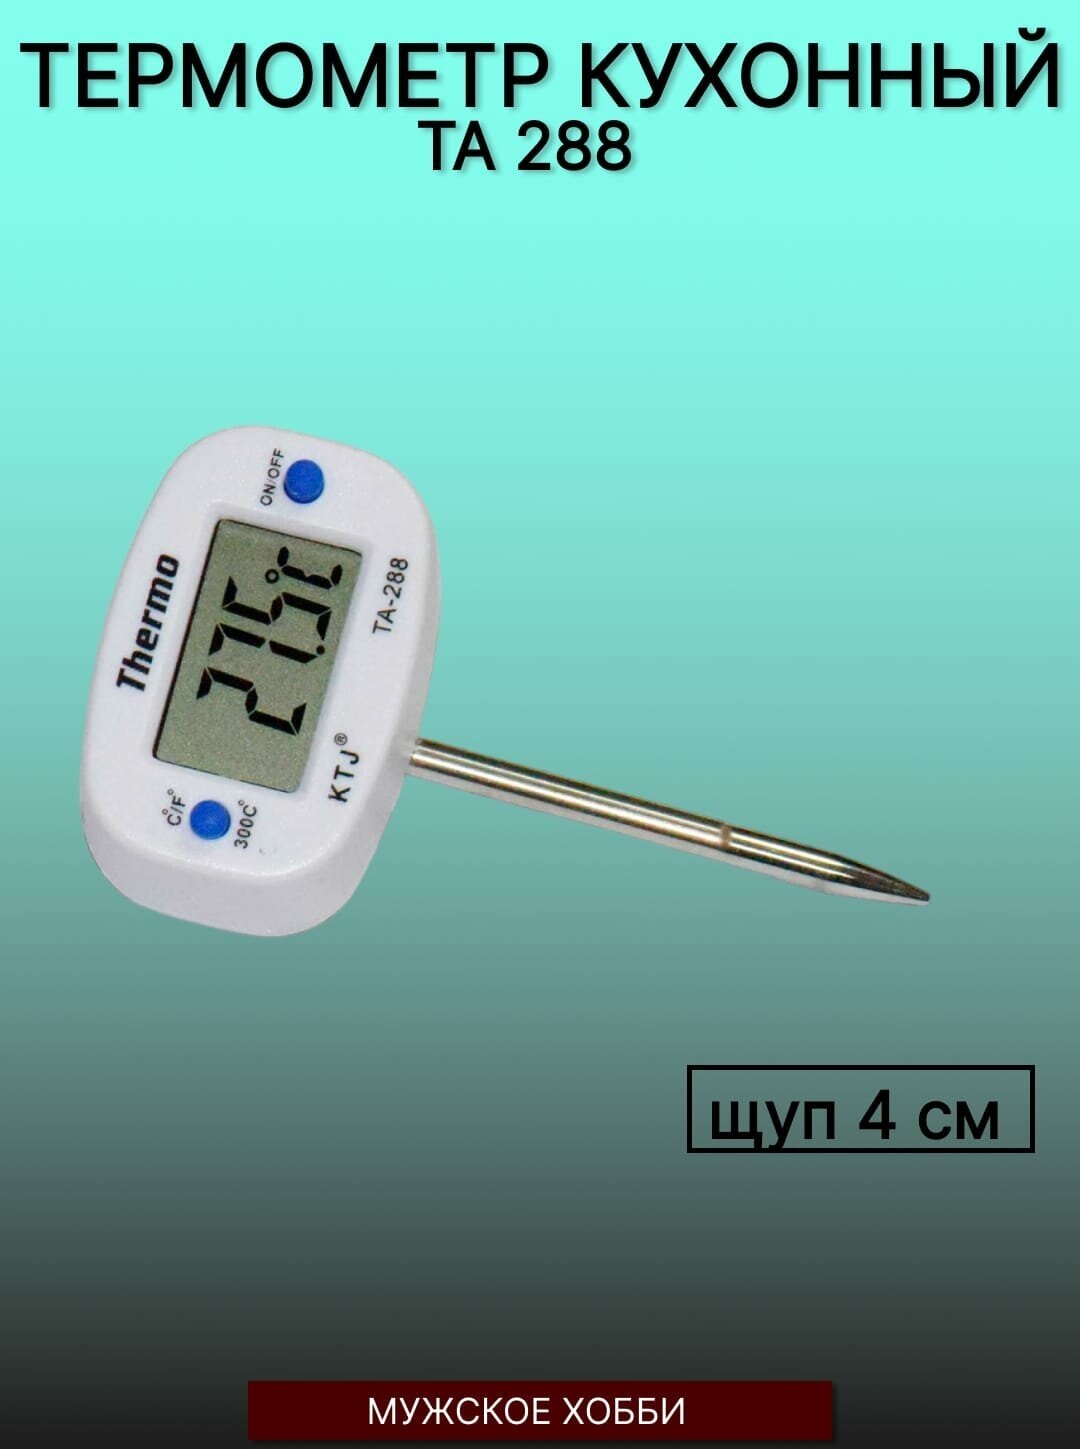 Термометр электронный кухонный/кулинарный ТА-288 щуп 4 см - фотография № 7